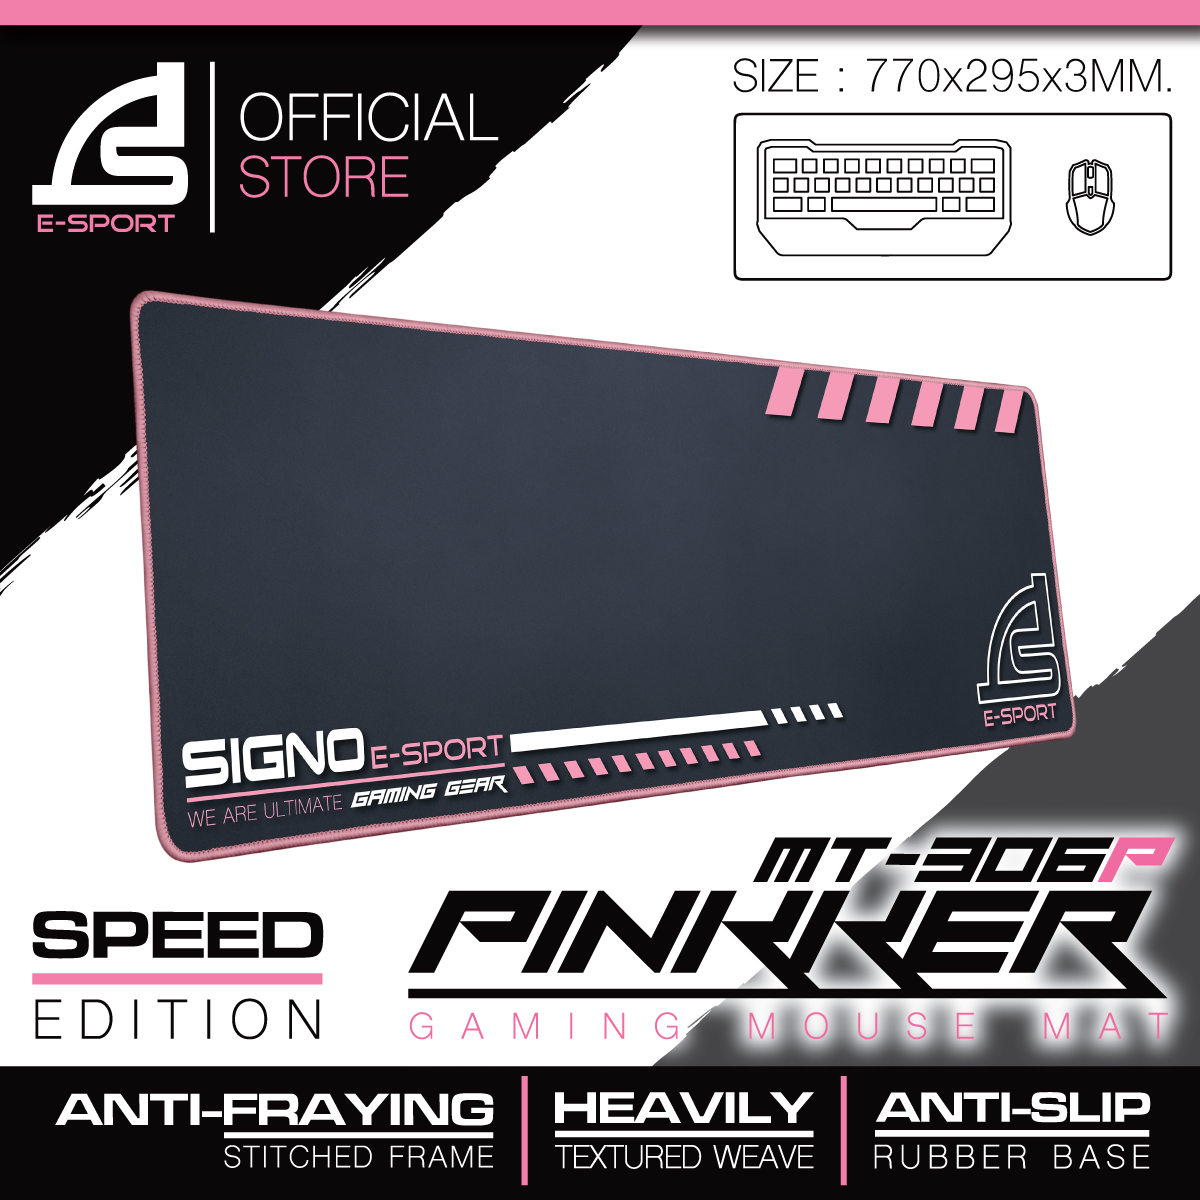 SIGNO Gaming Mouse Mat PINKKER รุ่น MT-306P (Speed Edition) (แผ่นรองเมาส์ เกมส์มิ่ง)